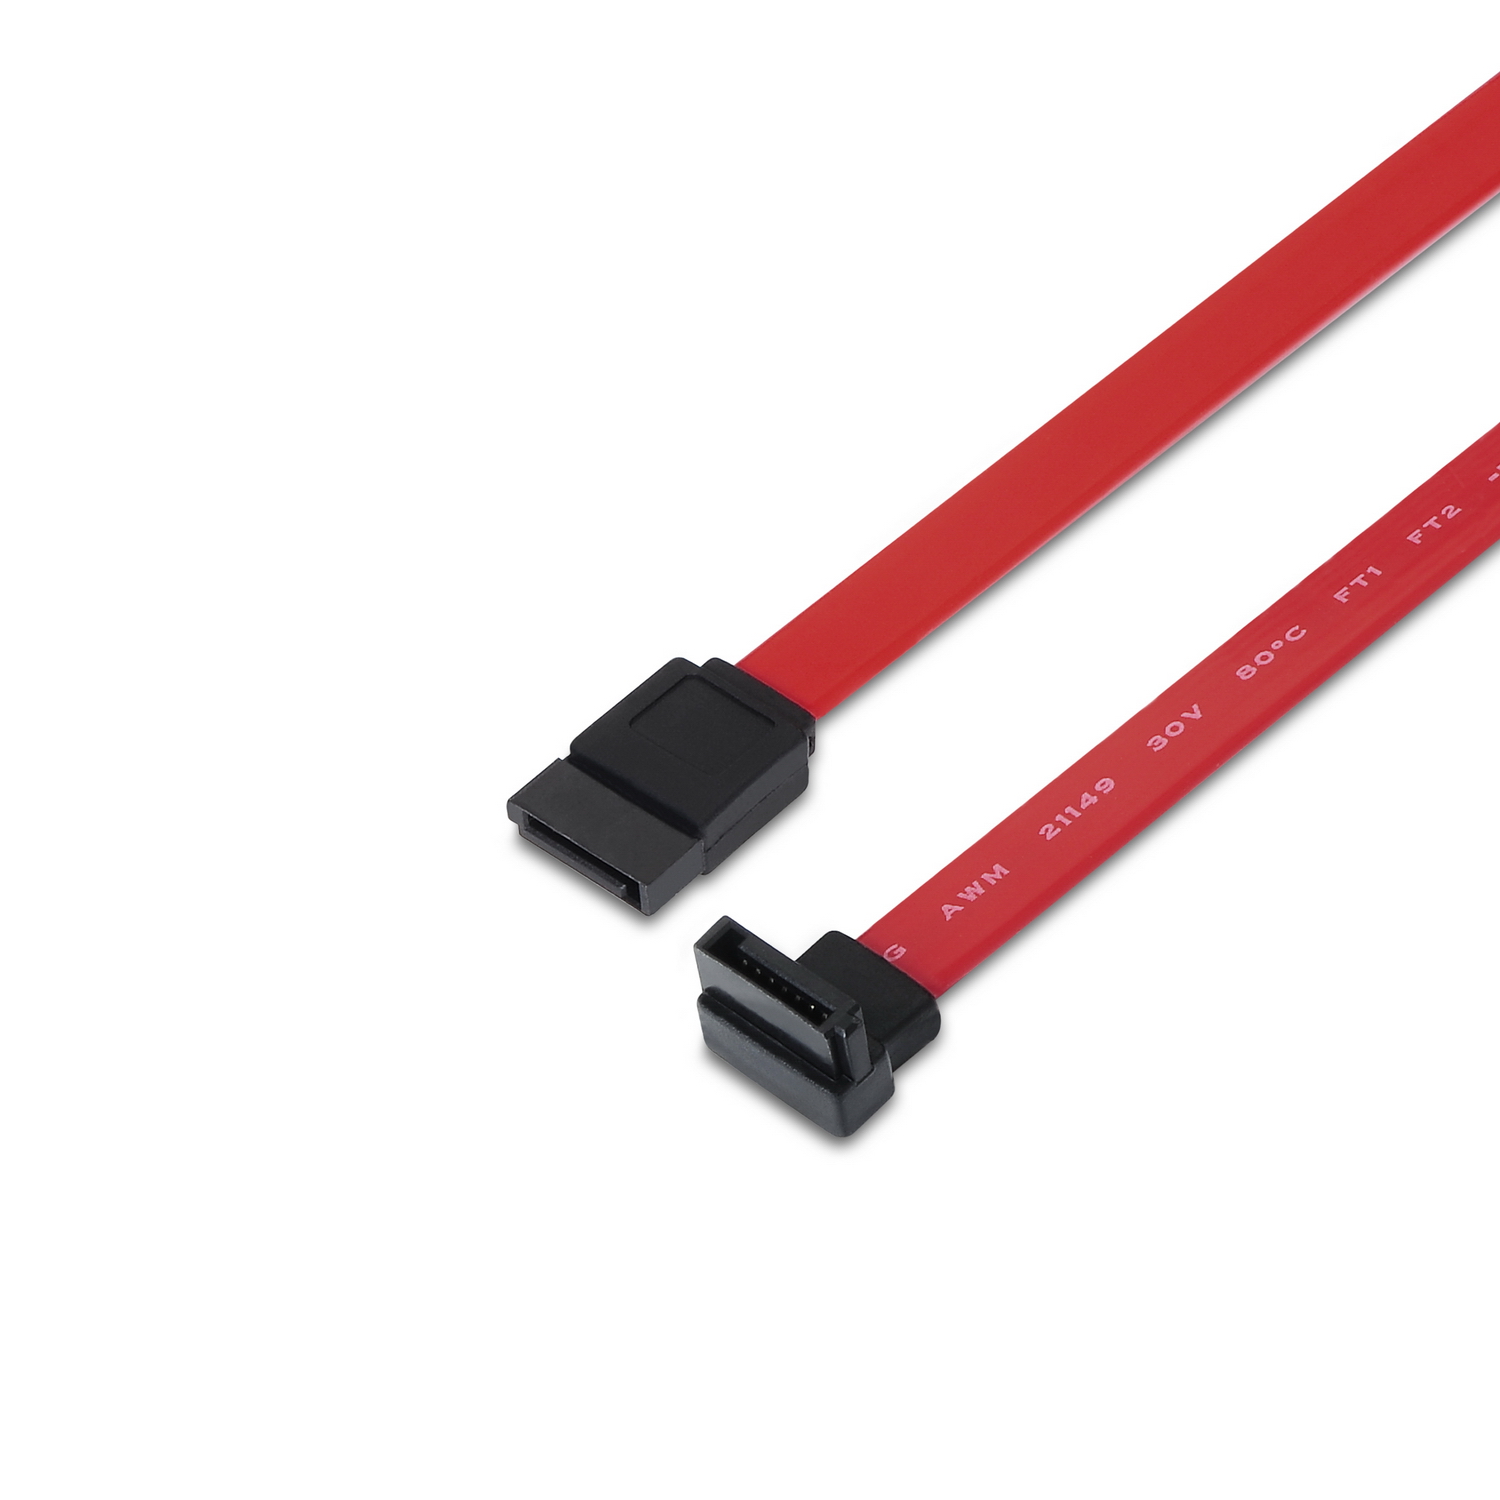 Aisens Câble SATA III Data 6G Data Coudé - 0.5m pour Disque Dur SATA I - II - III SSD - Couleur Rouge